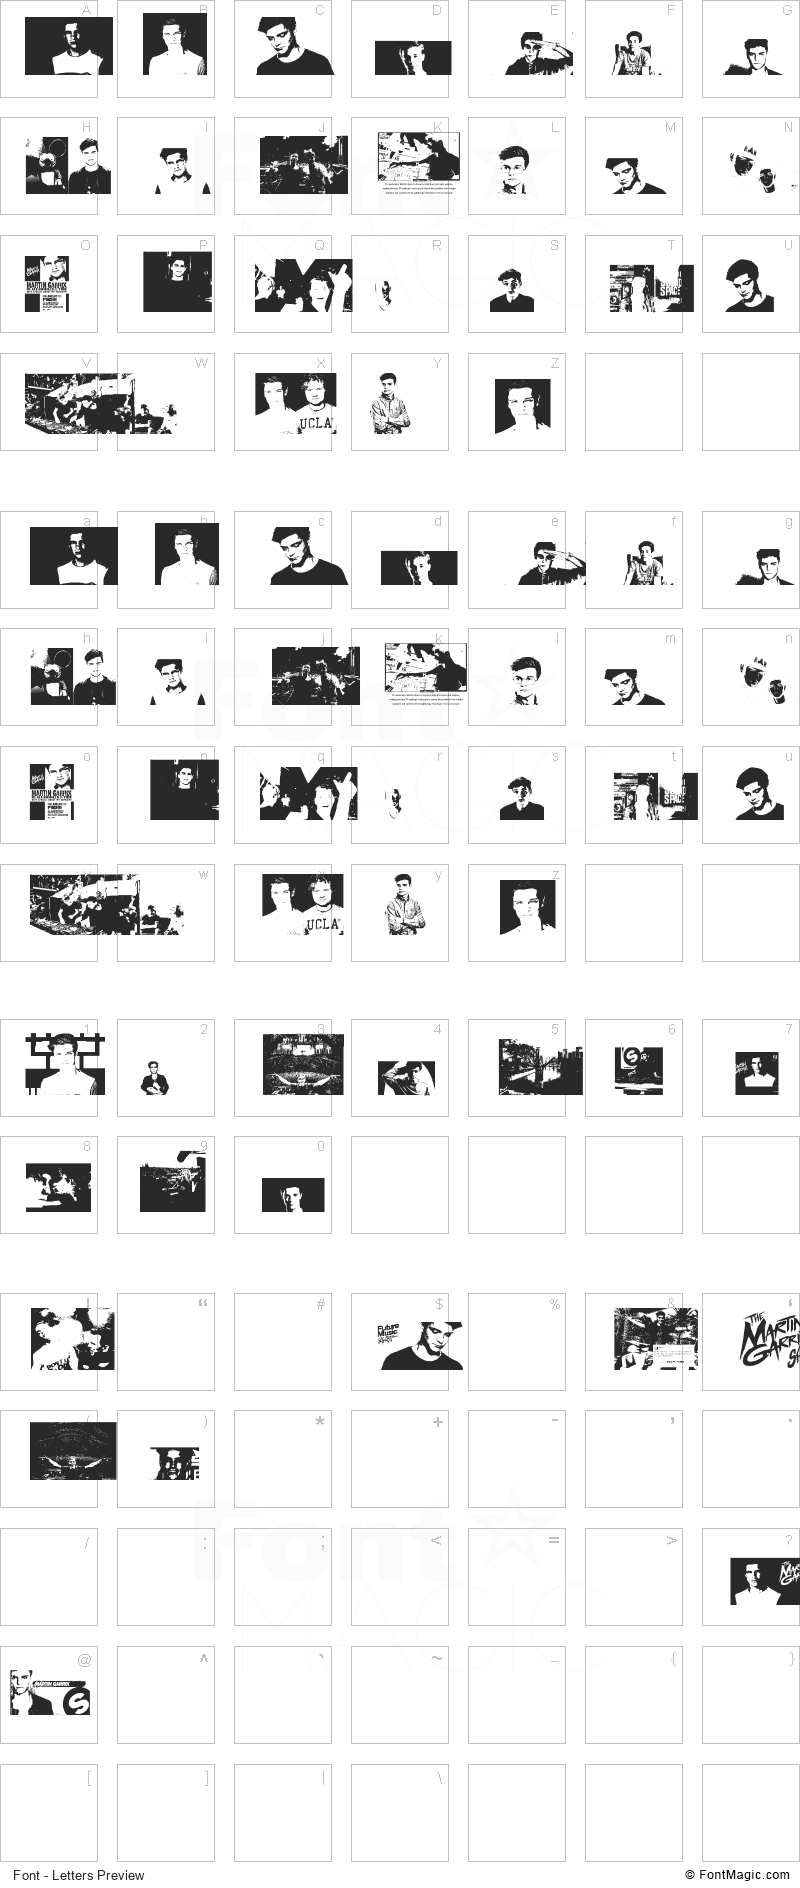 The Martin Garrix Font Font - All Latters Preview Chart